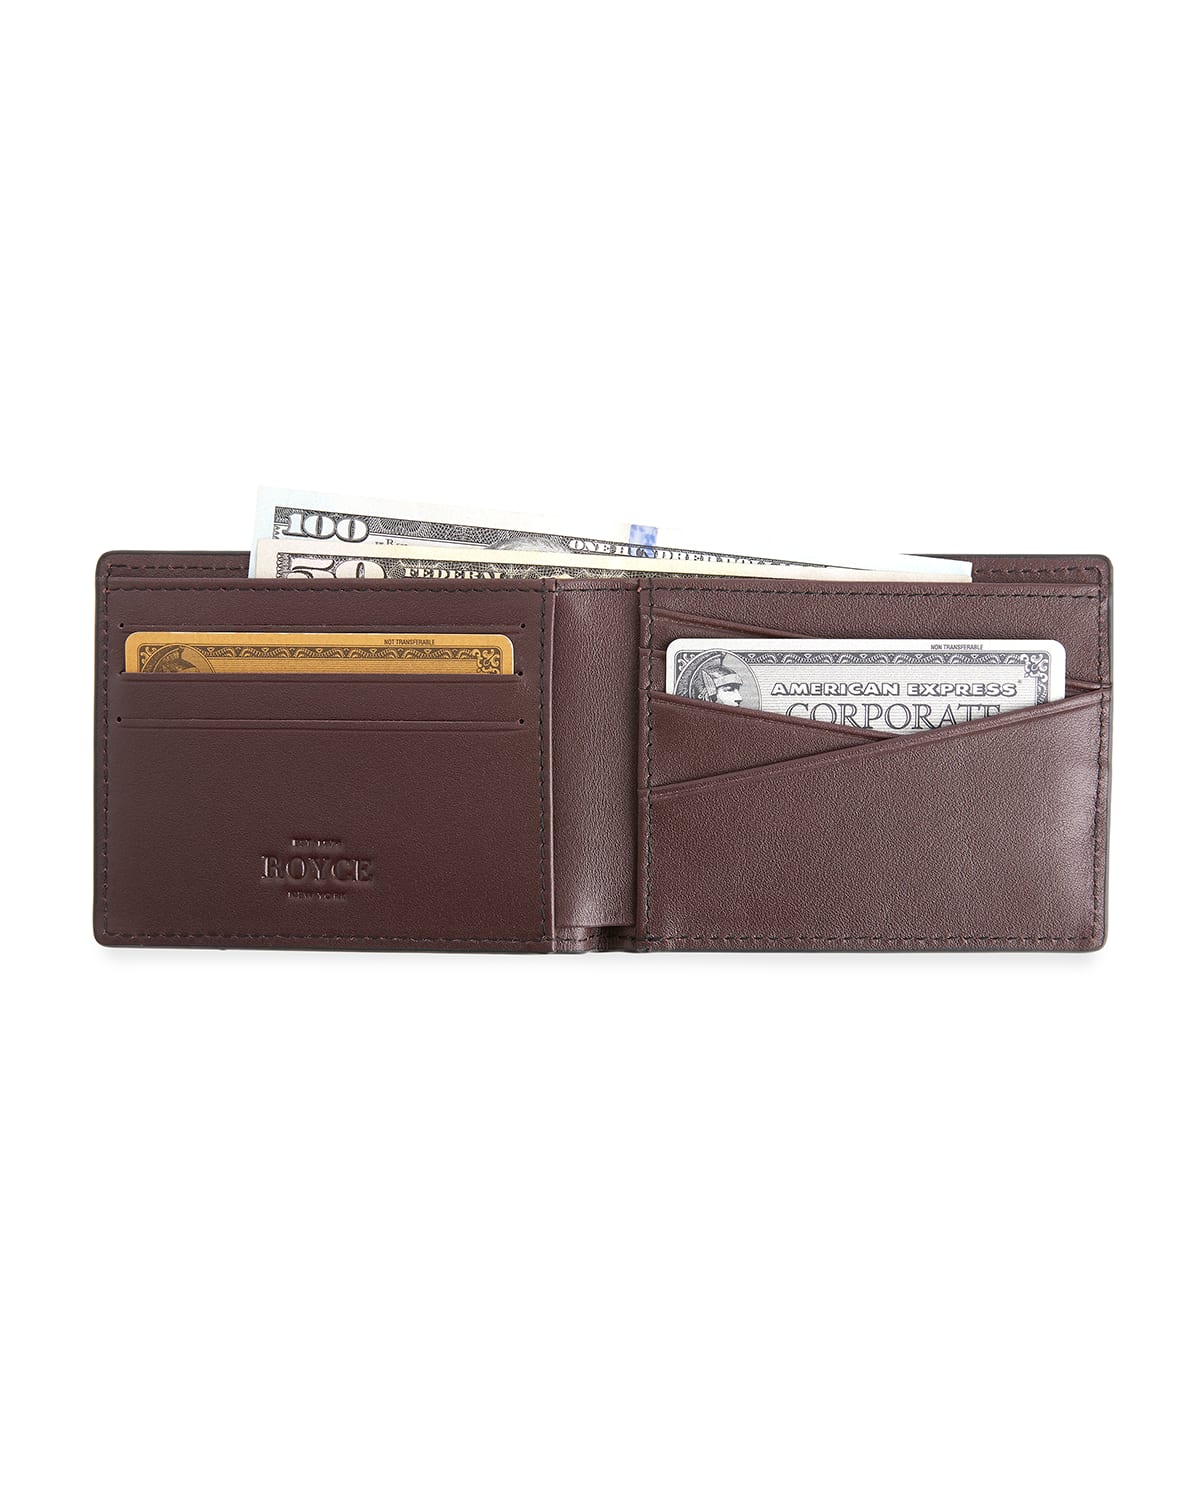 RFID Blocking Bifold Wallet, Personalized